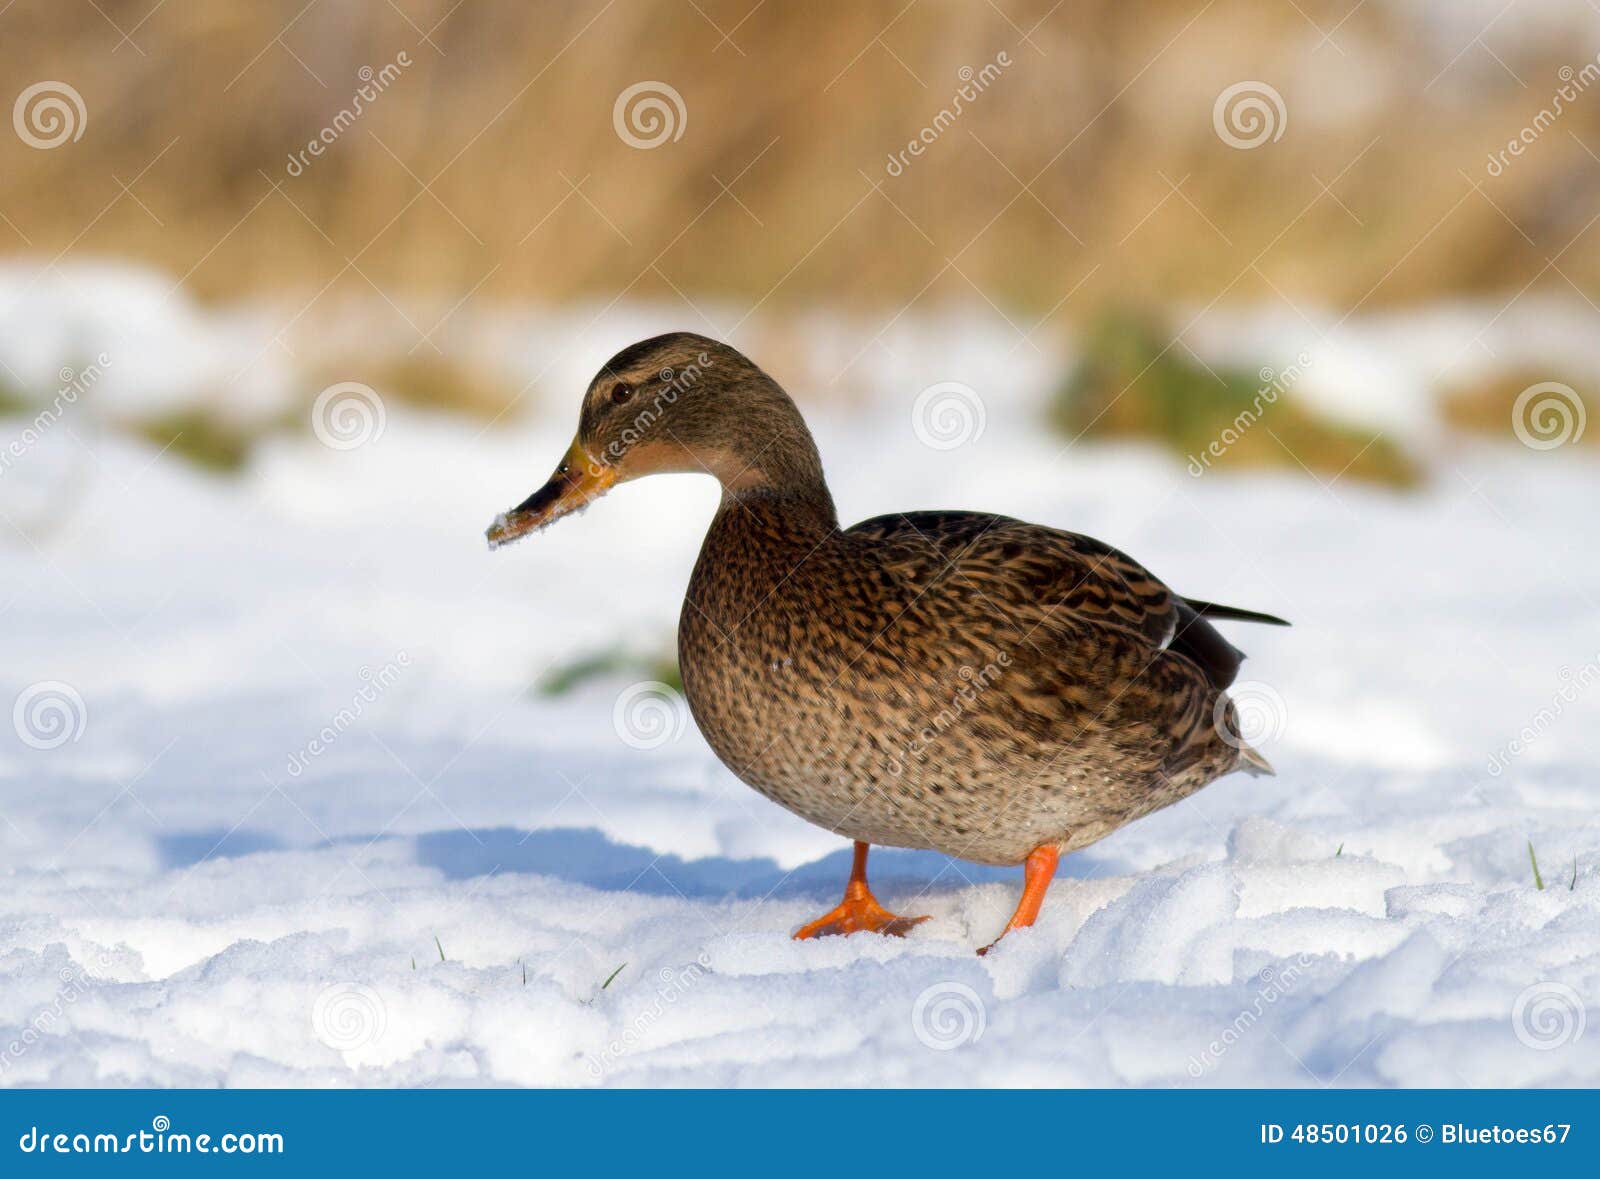 Duck in the snow. Mallard female duck in the winter snow